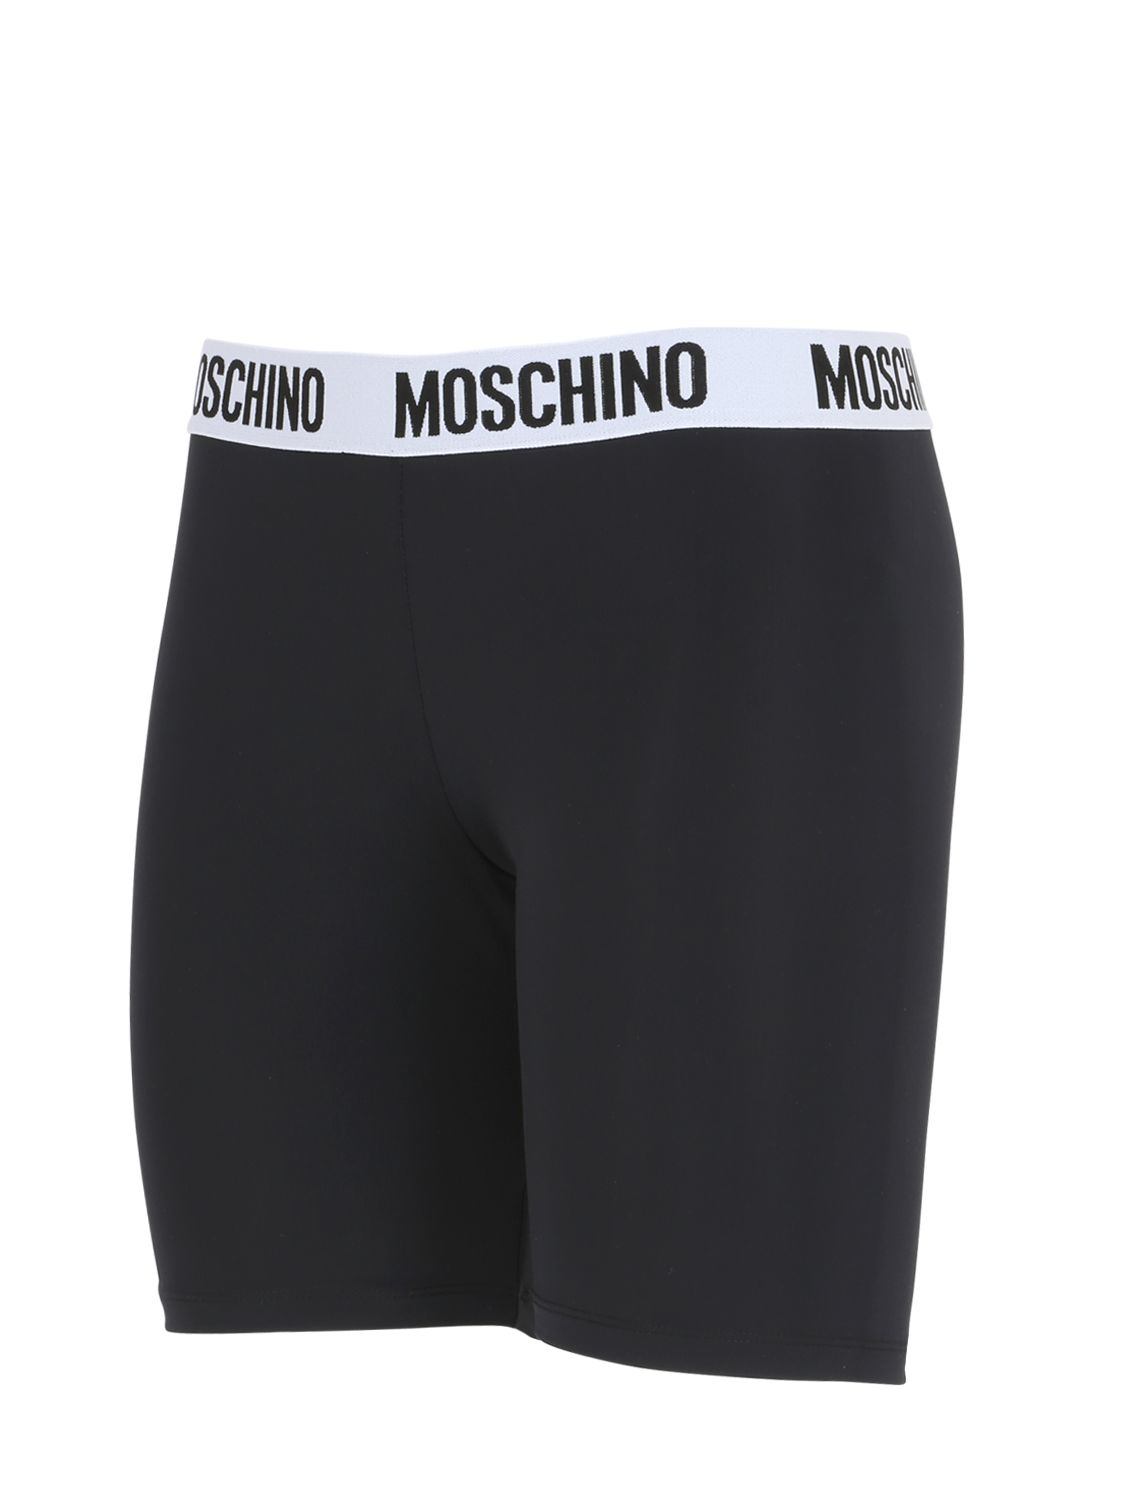 moschino biker shorts